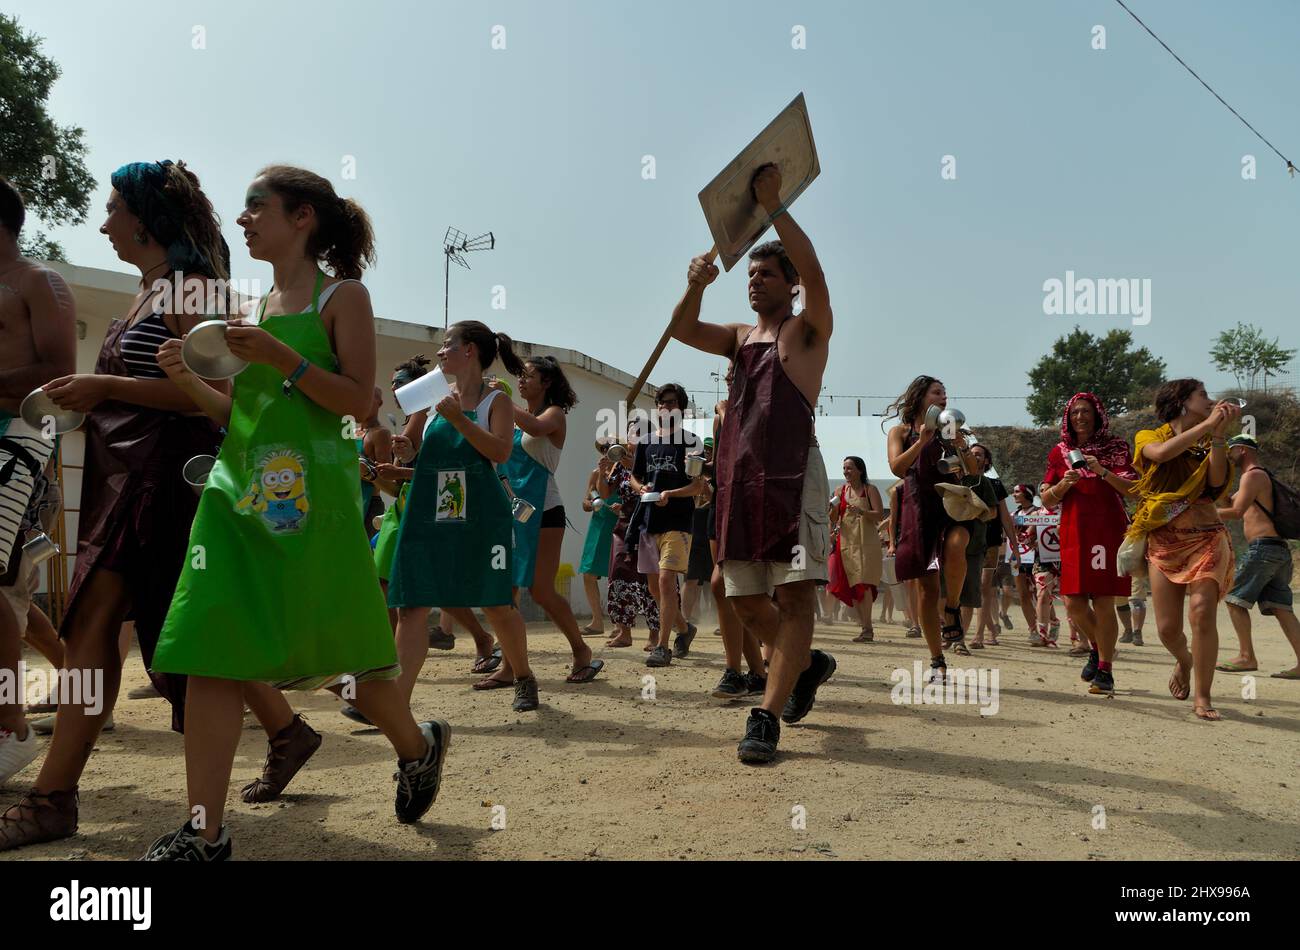 Andanças Festival 2018, August 05/18 Closing March and Celebration Ceremony. Castelo de Vide, Portugal Stock Photo